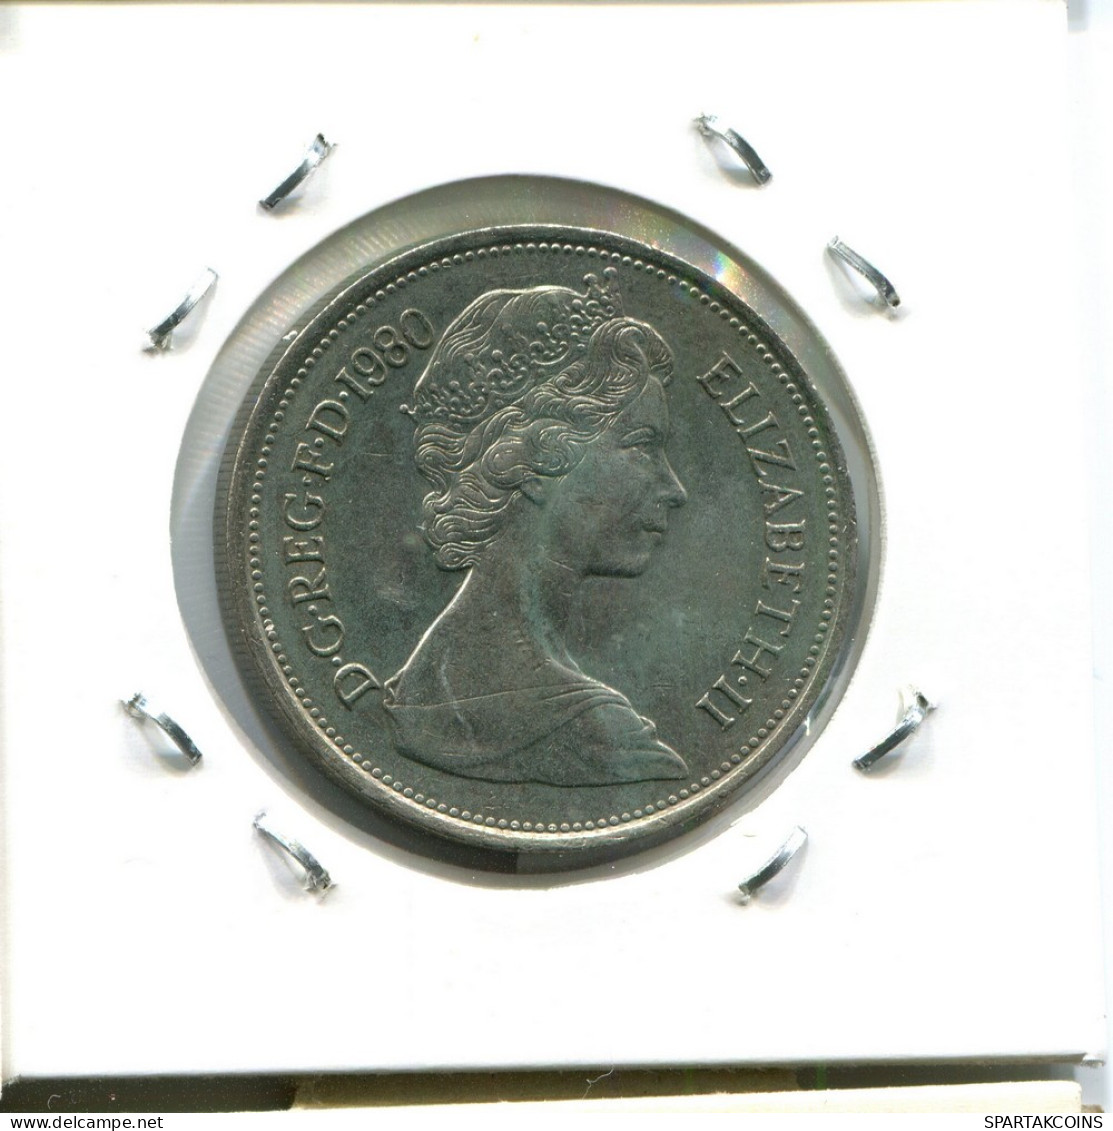 10 NEW PENCE 1980 UK GBAN BRETAÑA GREAT BRITAIN Moneda #AU836.E - 10 Pence & 10 New Pence